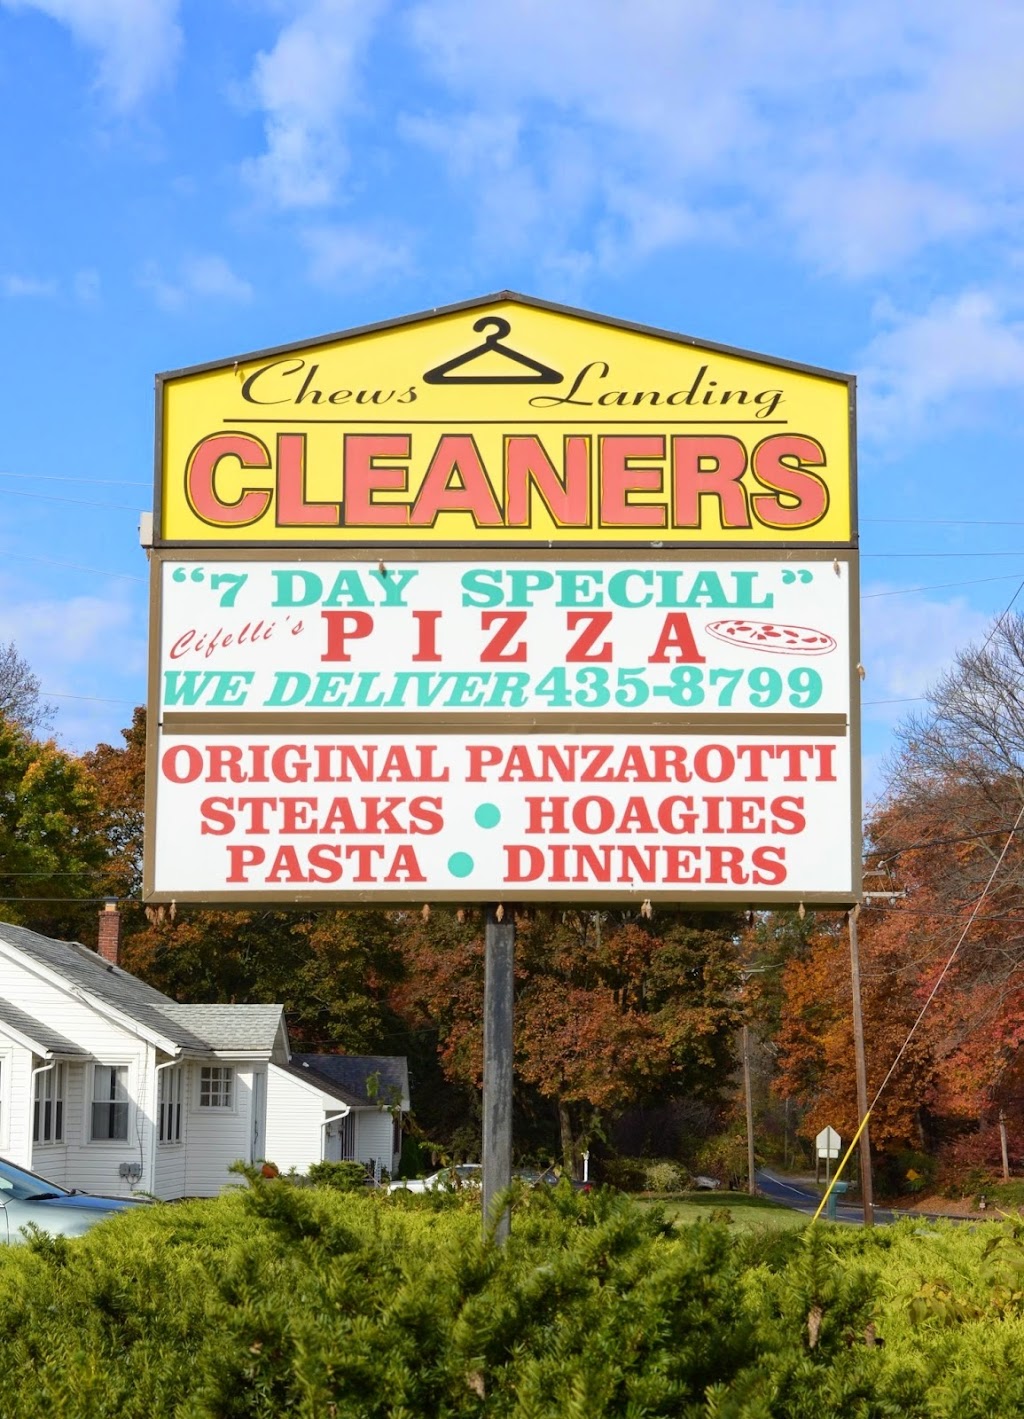 Chewslanding Cleaners | 704 Chews Landing Rd, Lindenwold, NJ 08021 | Phone: (856) 783-8180